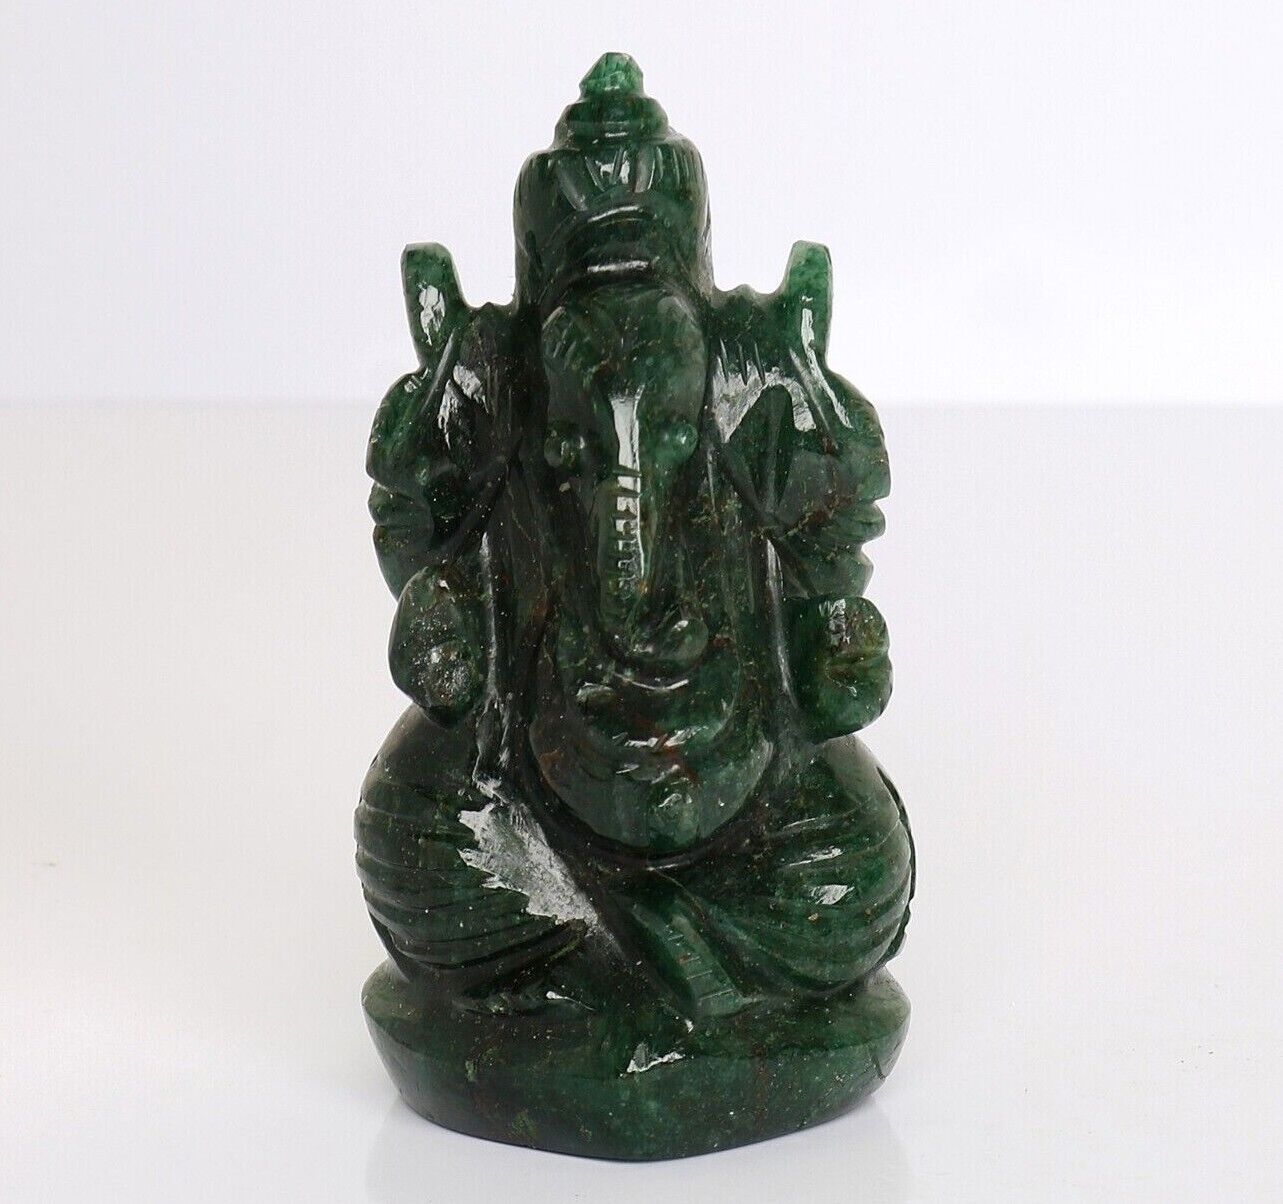 112.6g Statue Idol God Ganesha Ganesh Figurine Natural Green Jade Stone Handmade